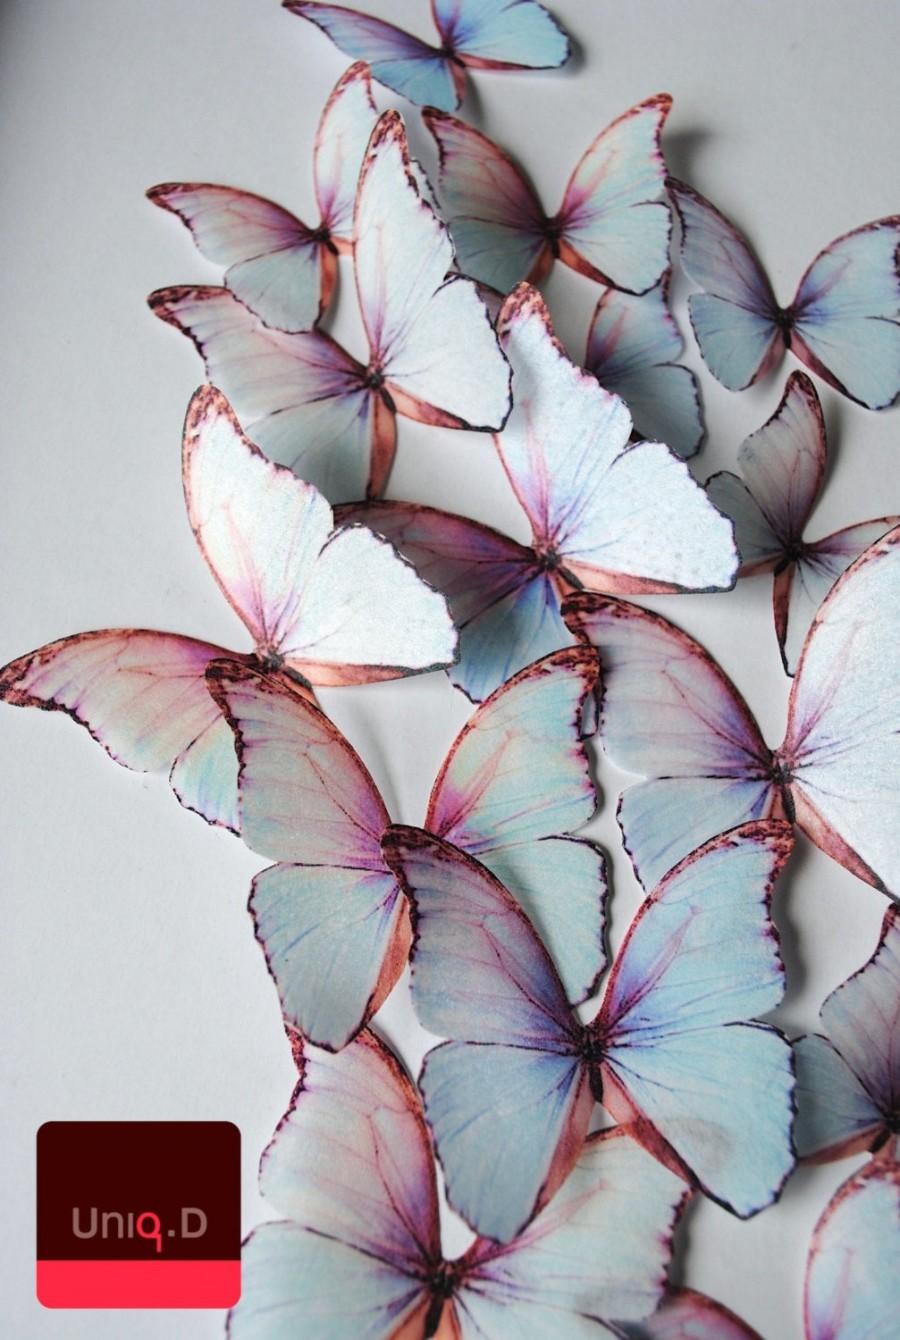 Hochzeit - 20 3D shimmering butterflies - iridescent white edible butterflies - frozen cake decoration - 3D edible butterflies by Uniqdots on Etsy